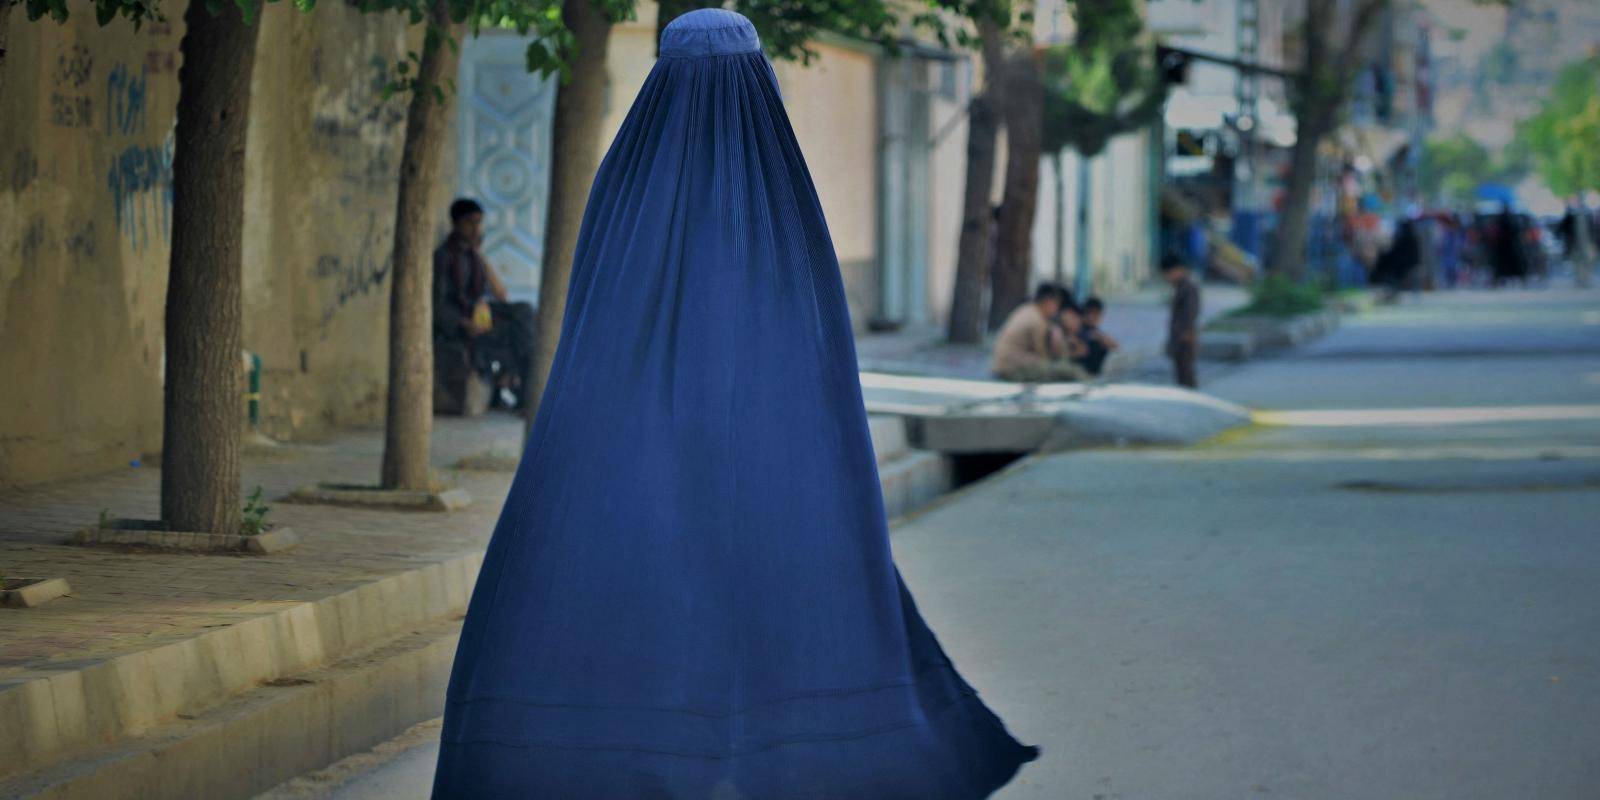 Women's rights under threat in Taliban-run Afghanistan